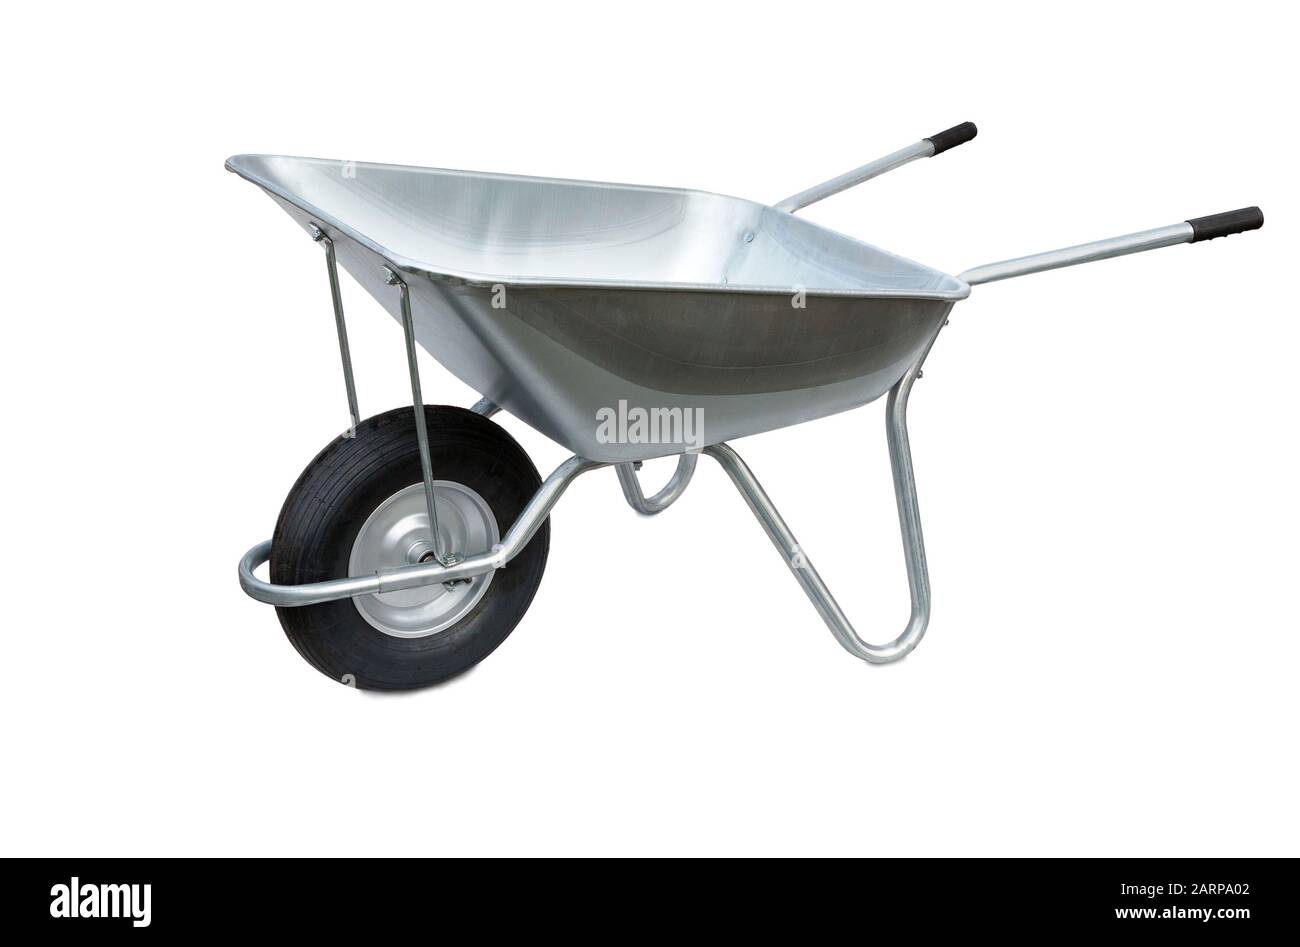 Wheelbarrow isolated on white background. Garden metal wheelbarrow cart Stock Photo